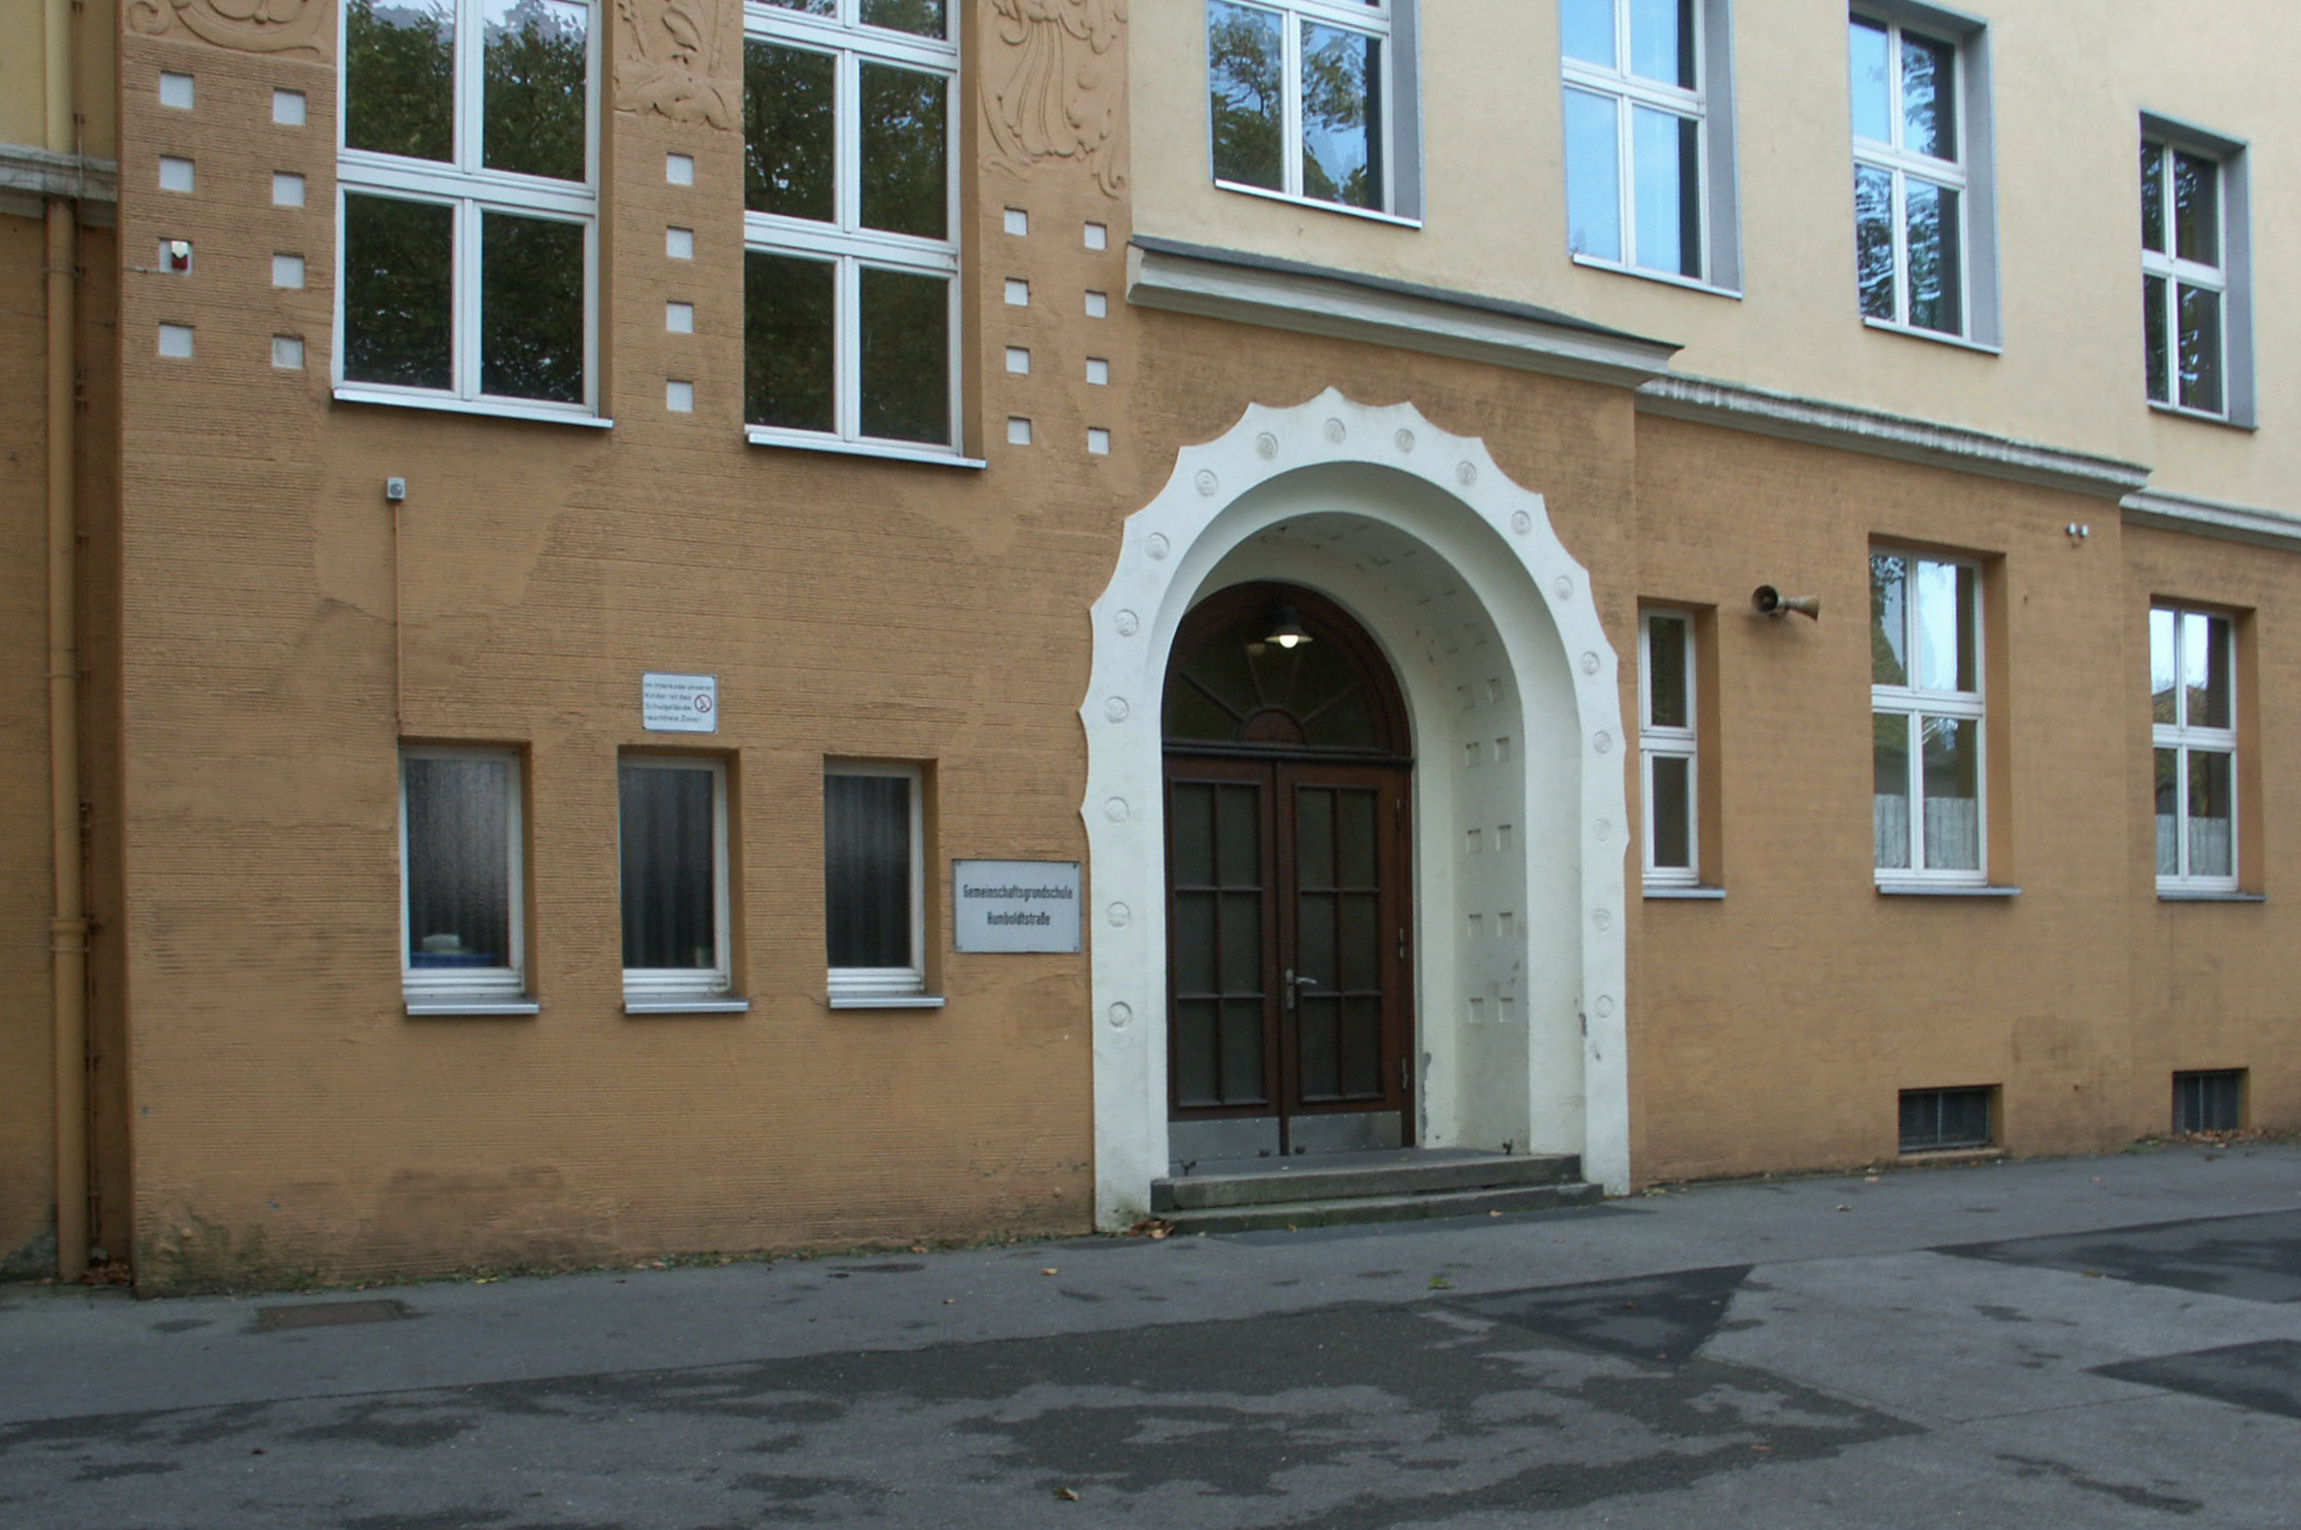 Humboldtschule